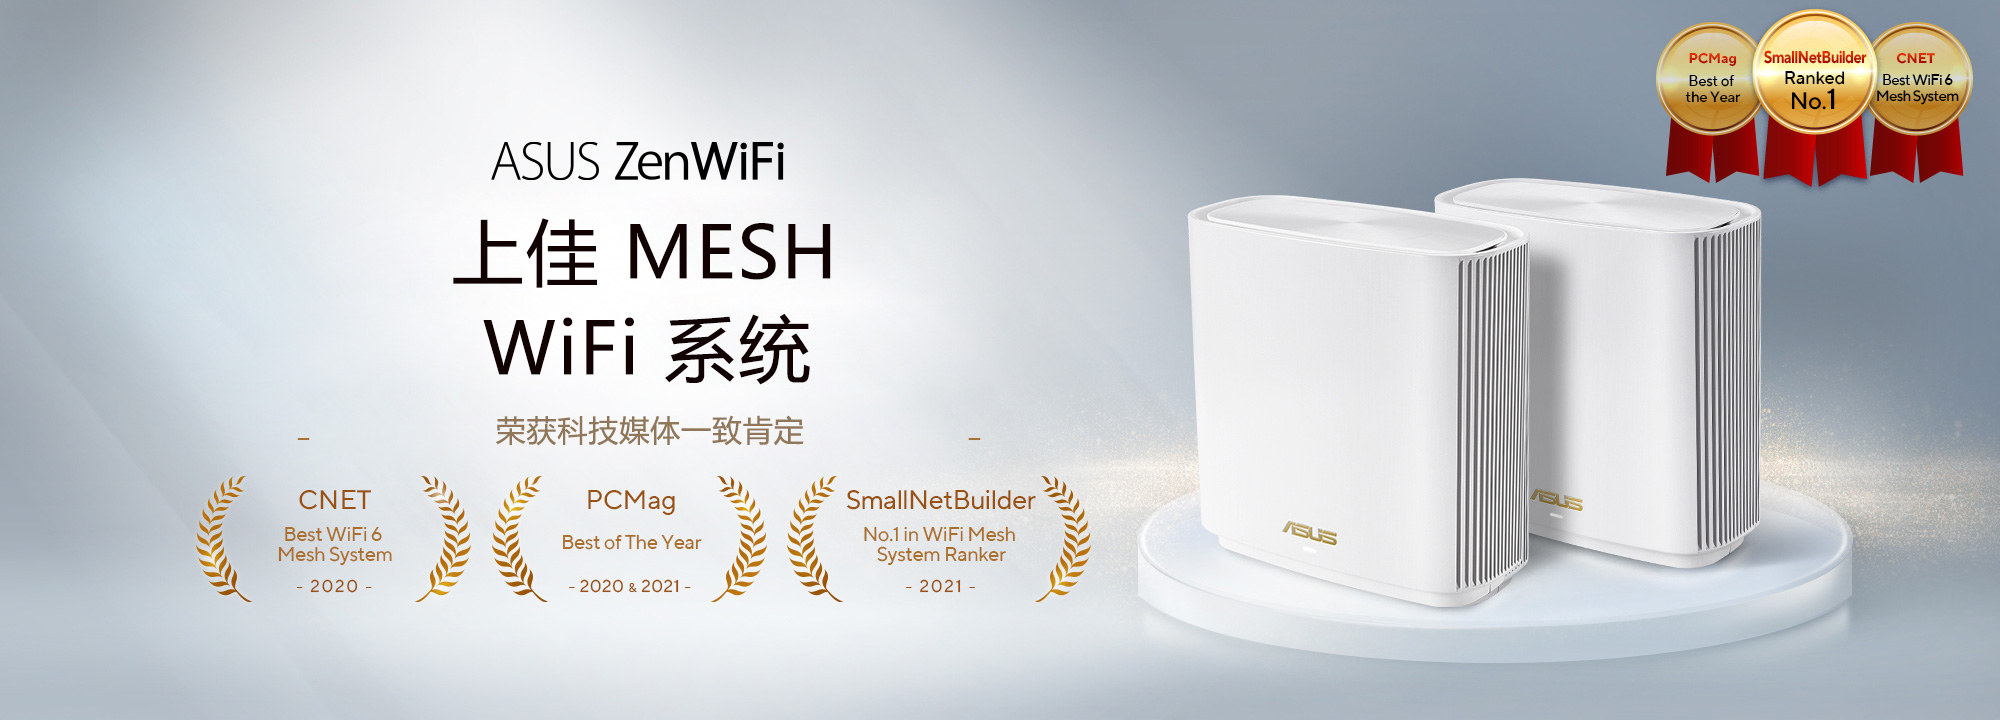 ASUS ZenWiFi 网状 WiFi 系统荣获科技媒体颁发上佳 WiFi 6 网状路由器奖项，包括 CNET、PCMag 及 SmallNetBuilder。